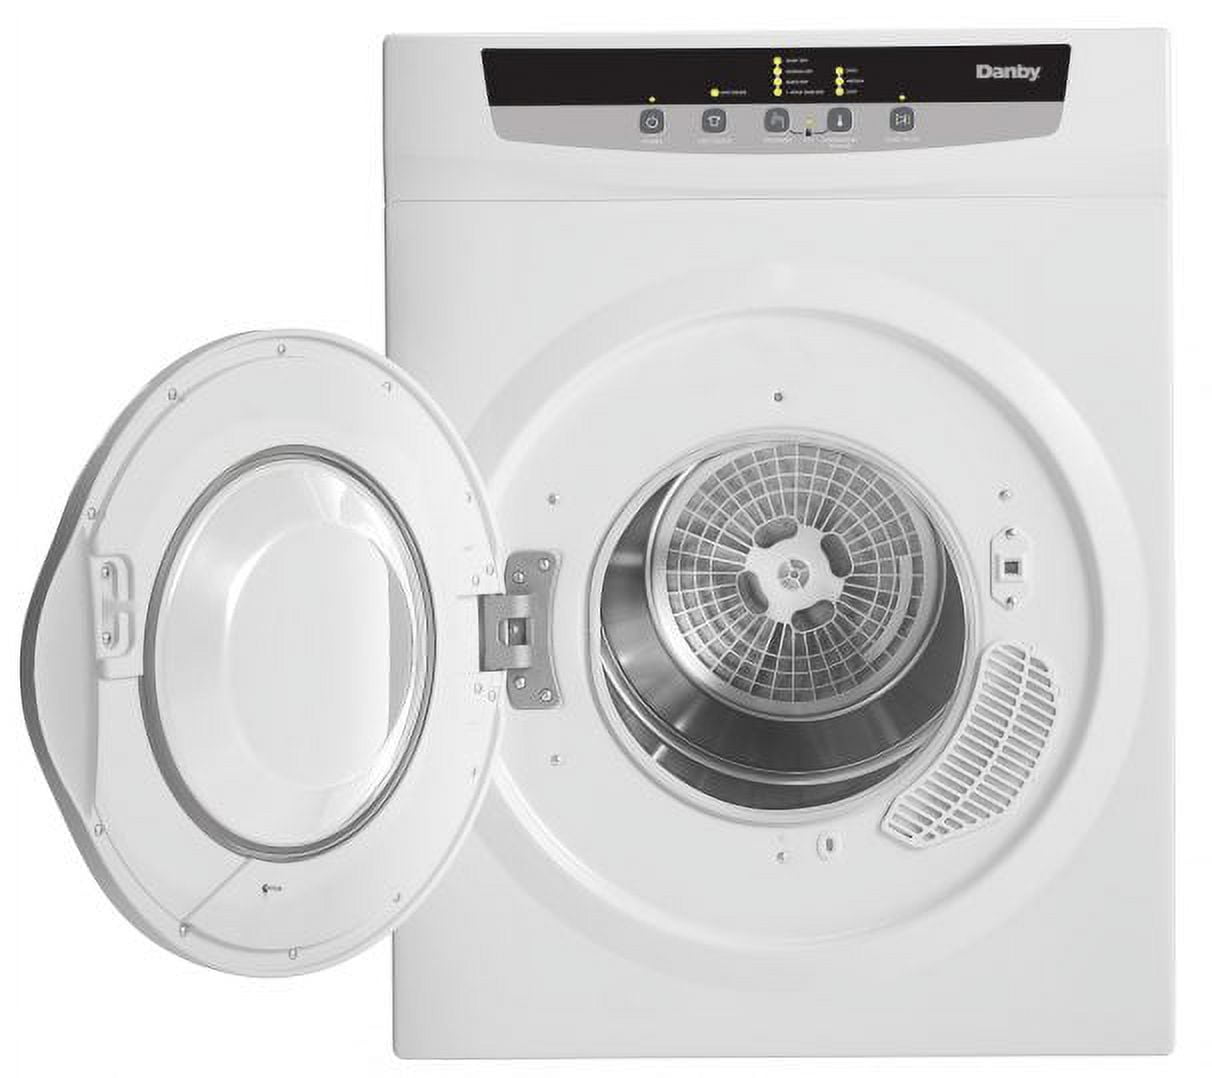 110 vs 220 Volt Laundry Clothes Dryers Controversy 